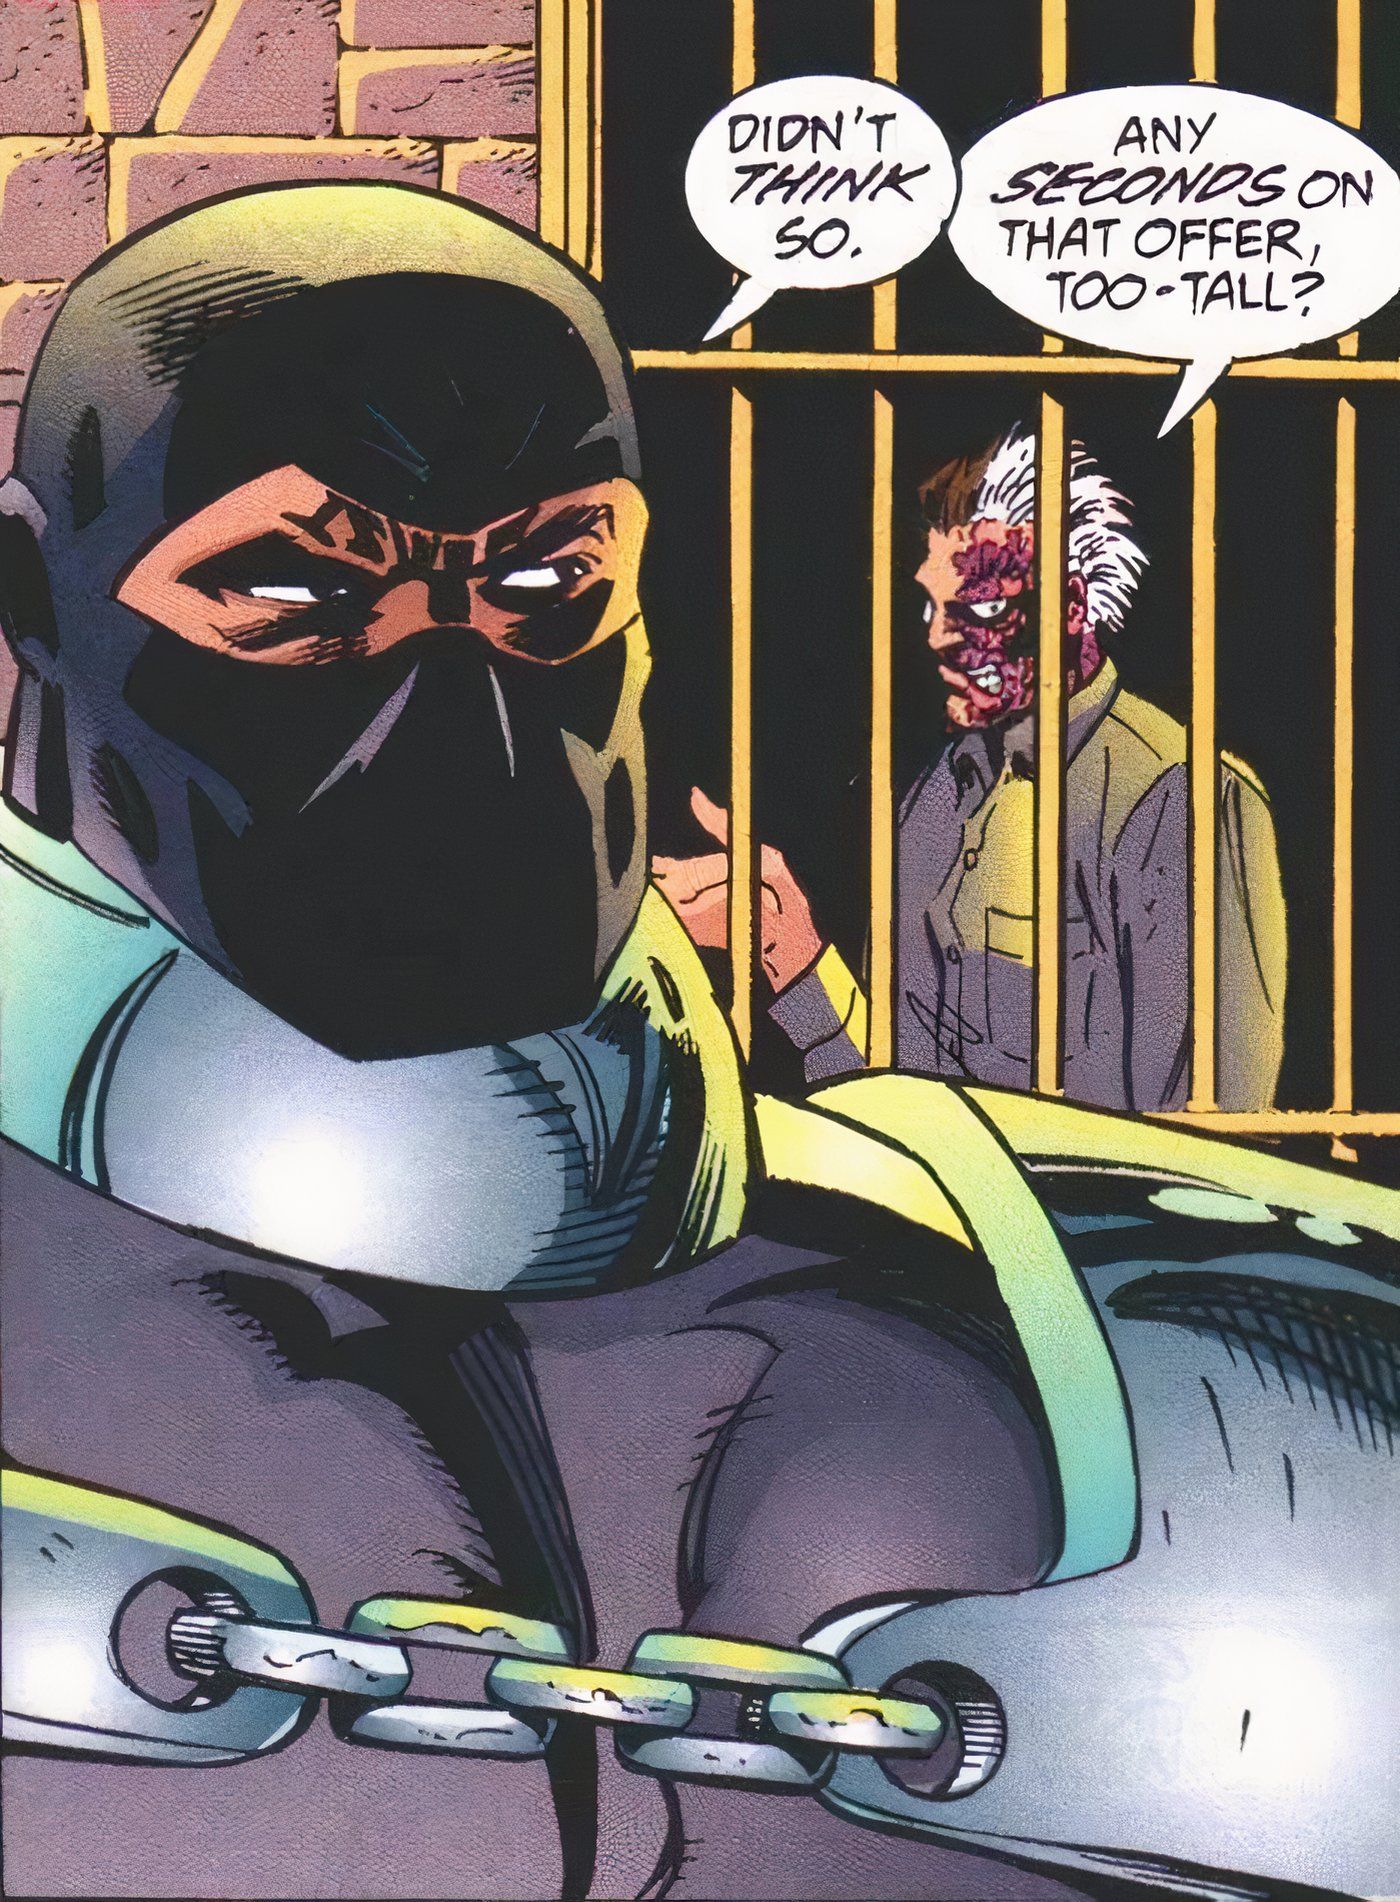 Batman villain Lock-Up talks to Two-Face through the bars of his cell in Arkham Asylum.